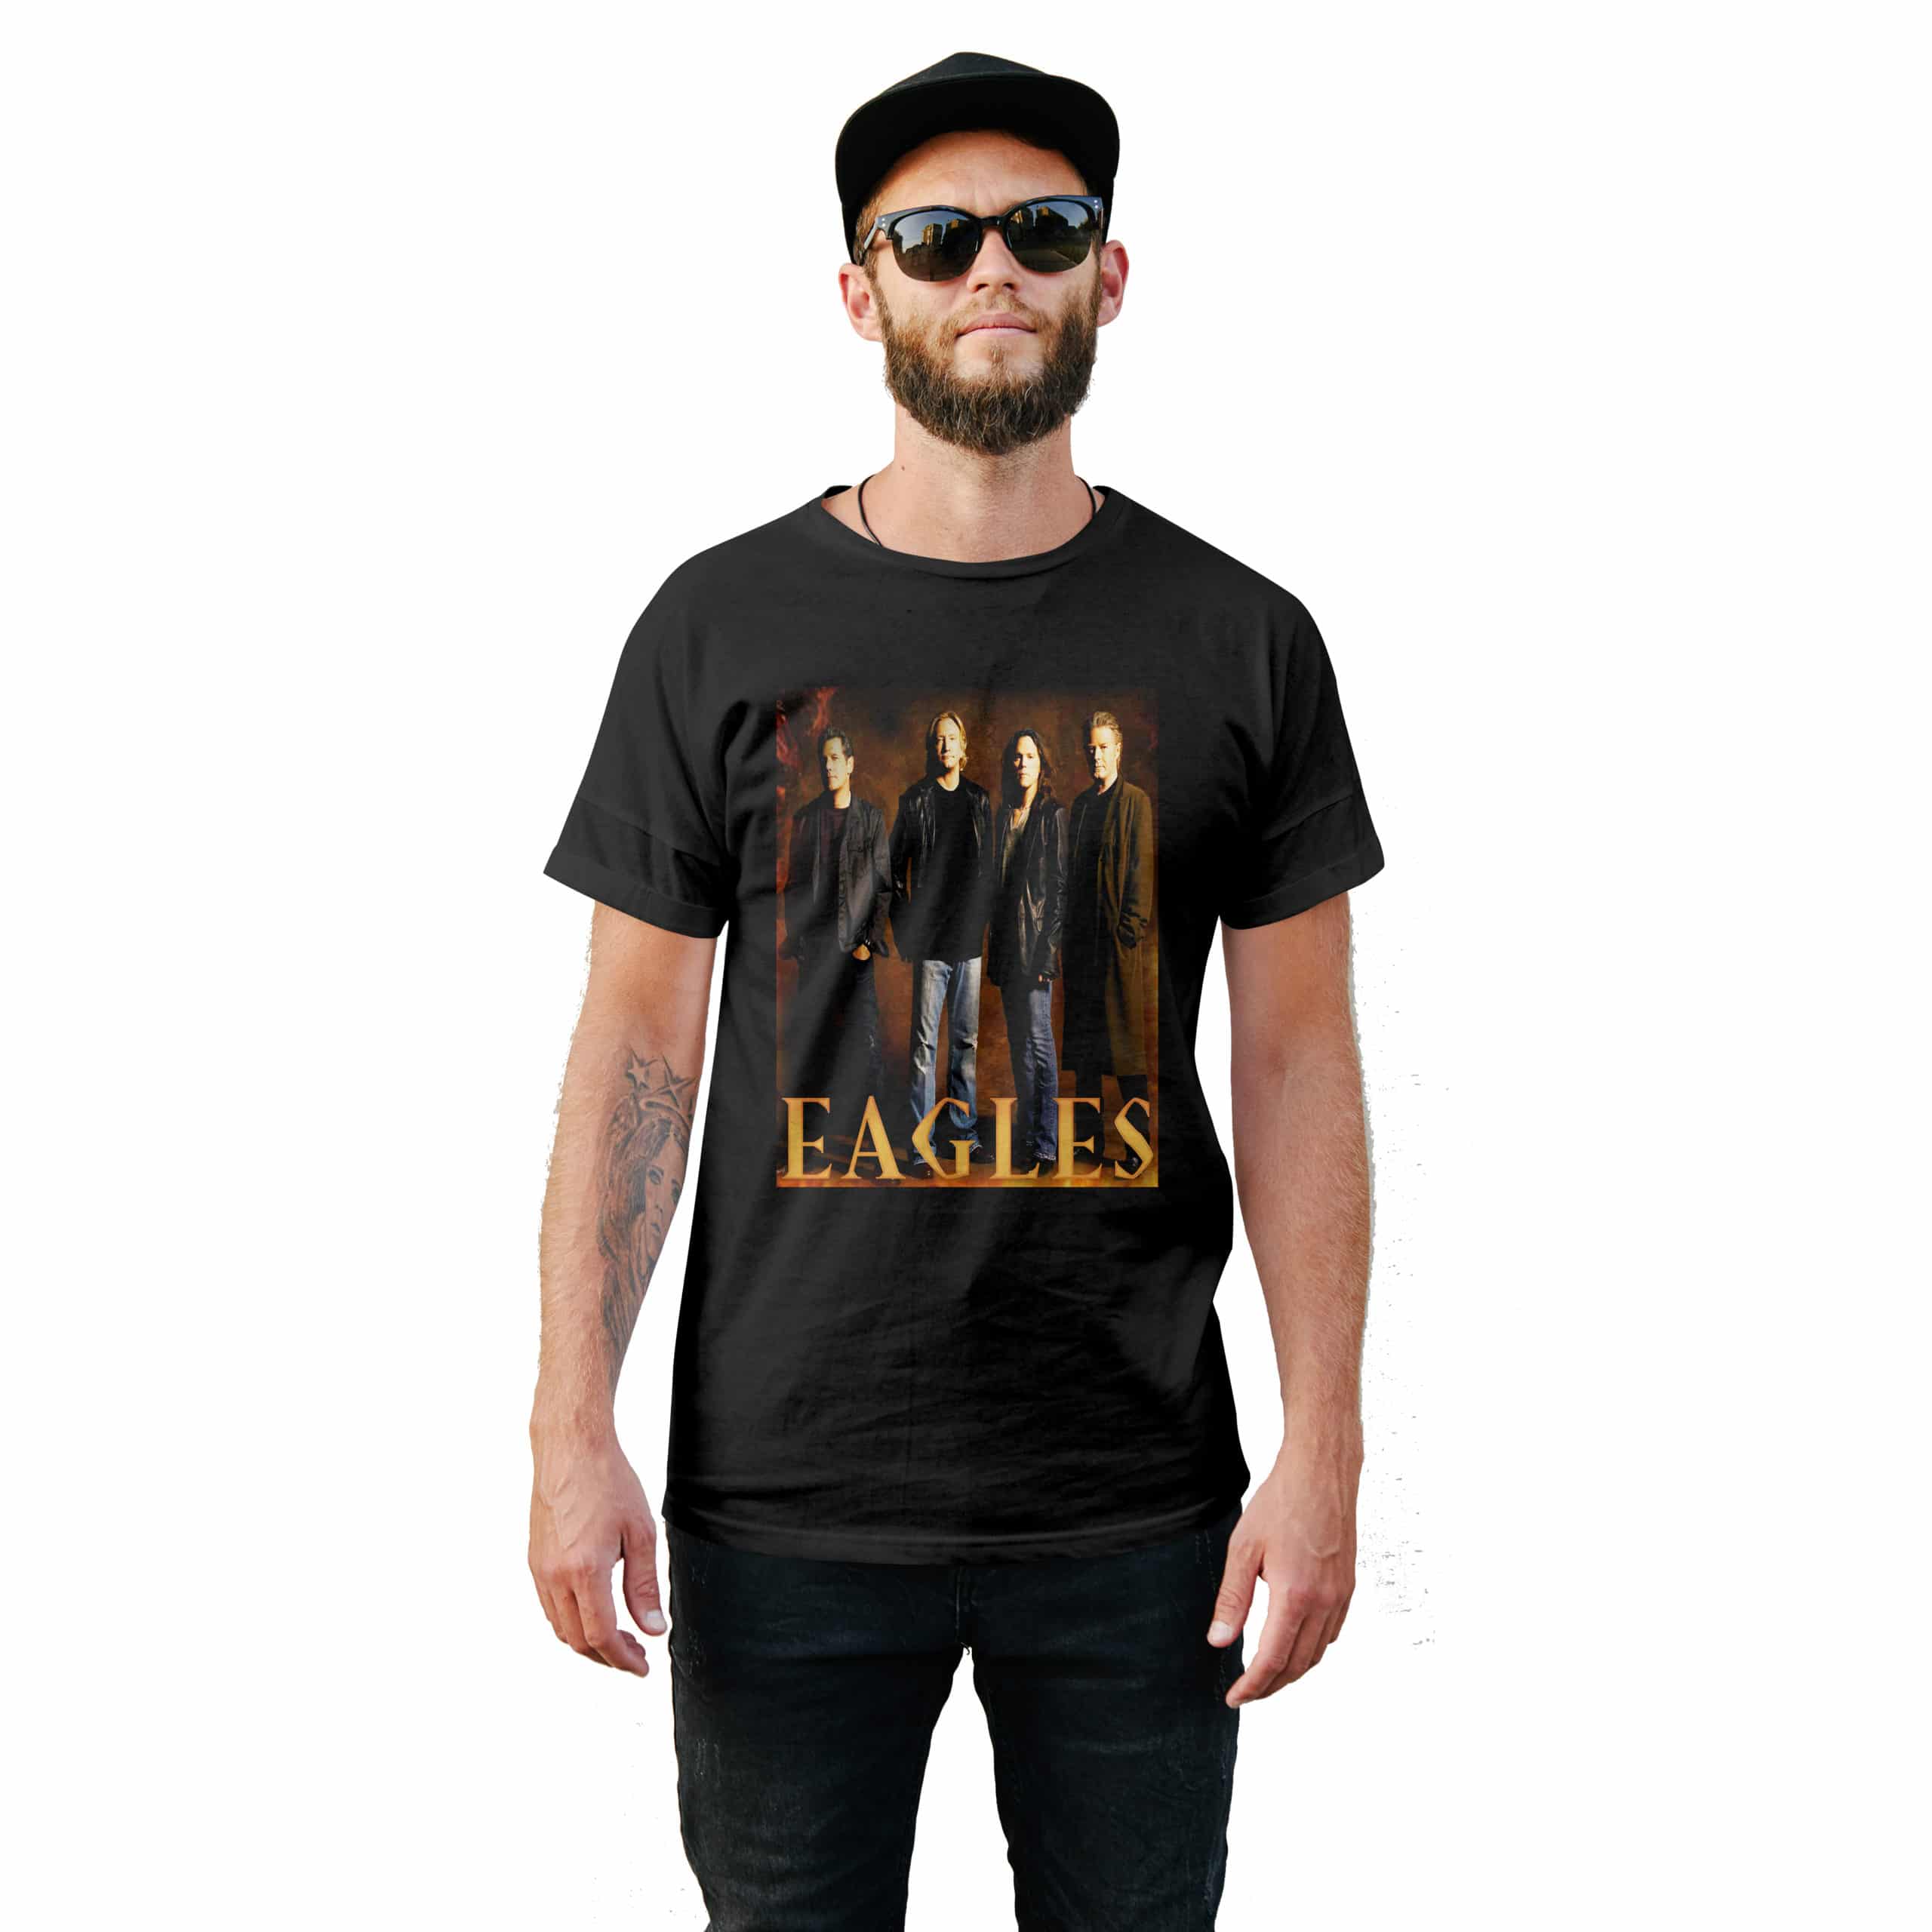 Cuztom Threadz Vintage Style Eagles T-Shirt Black Medium